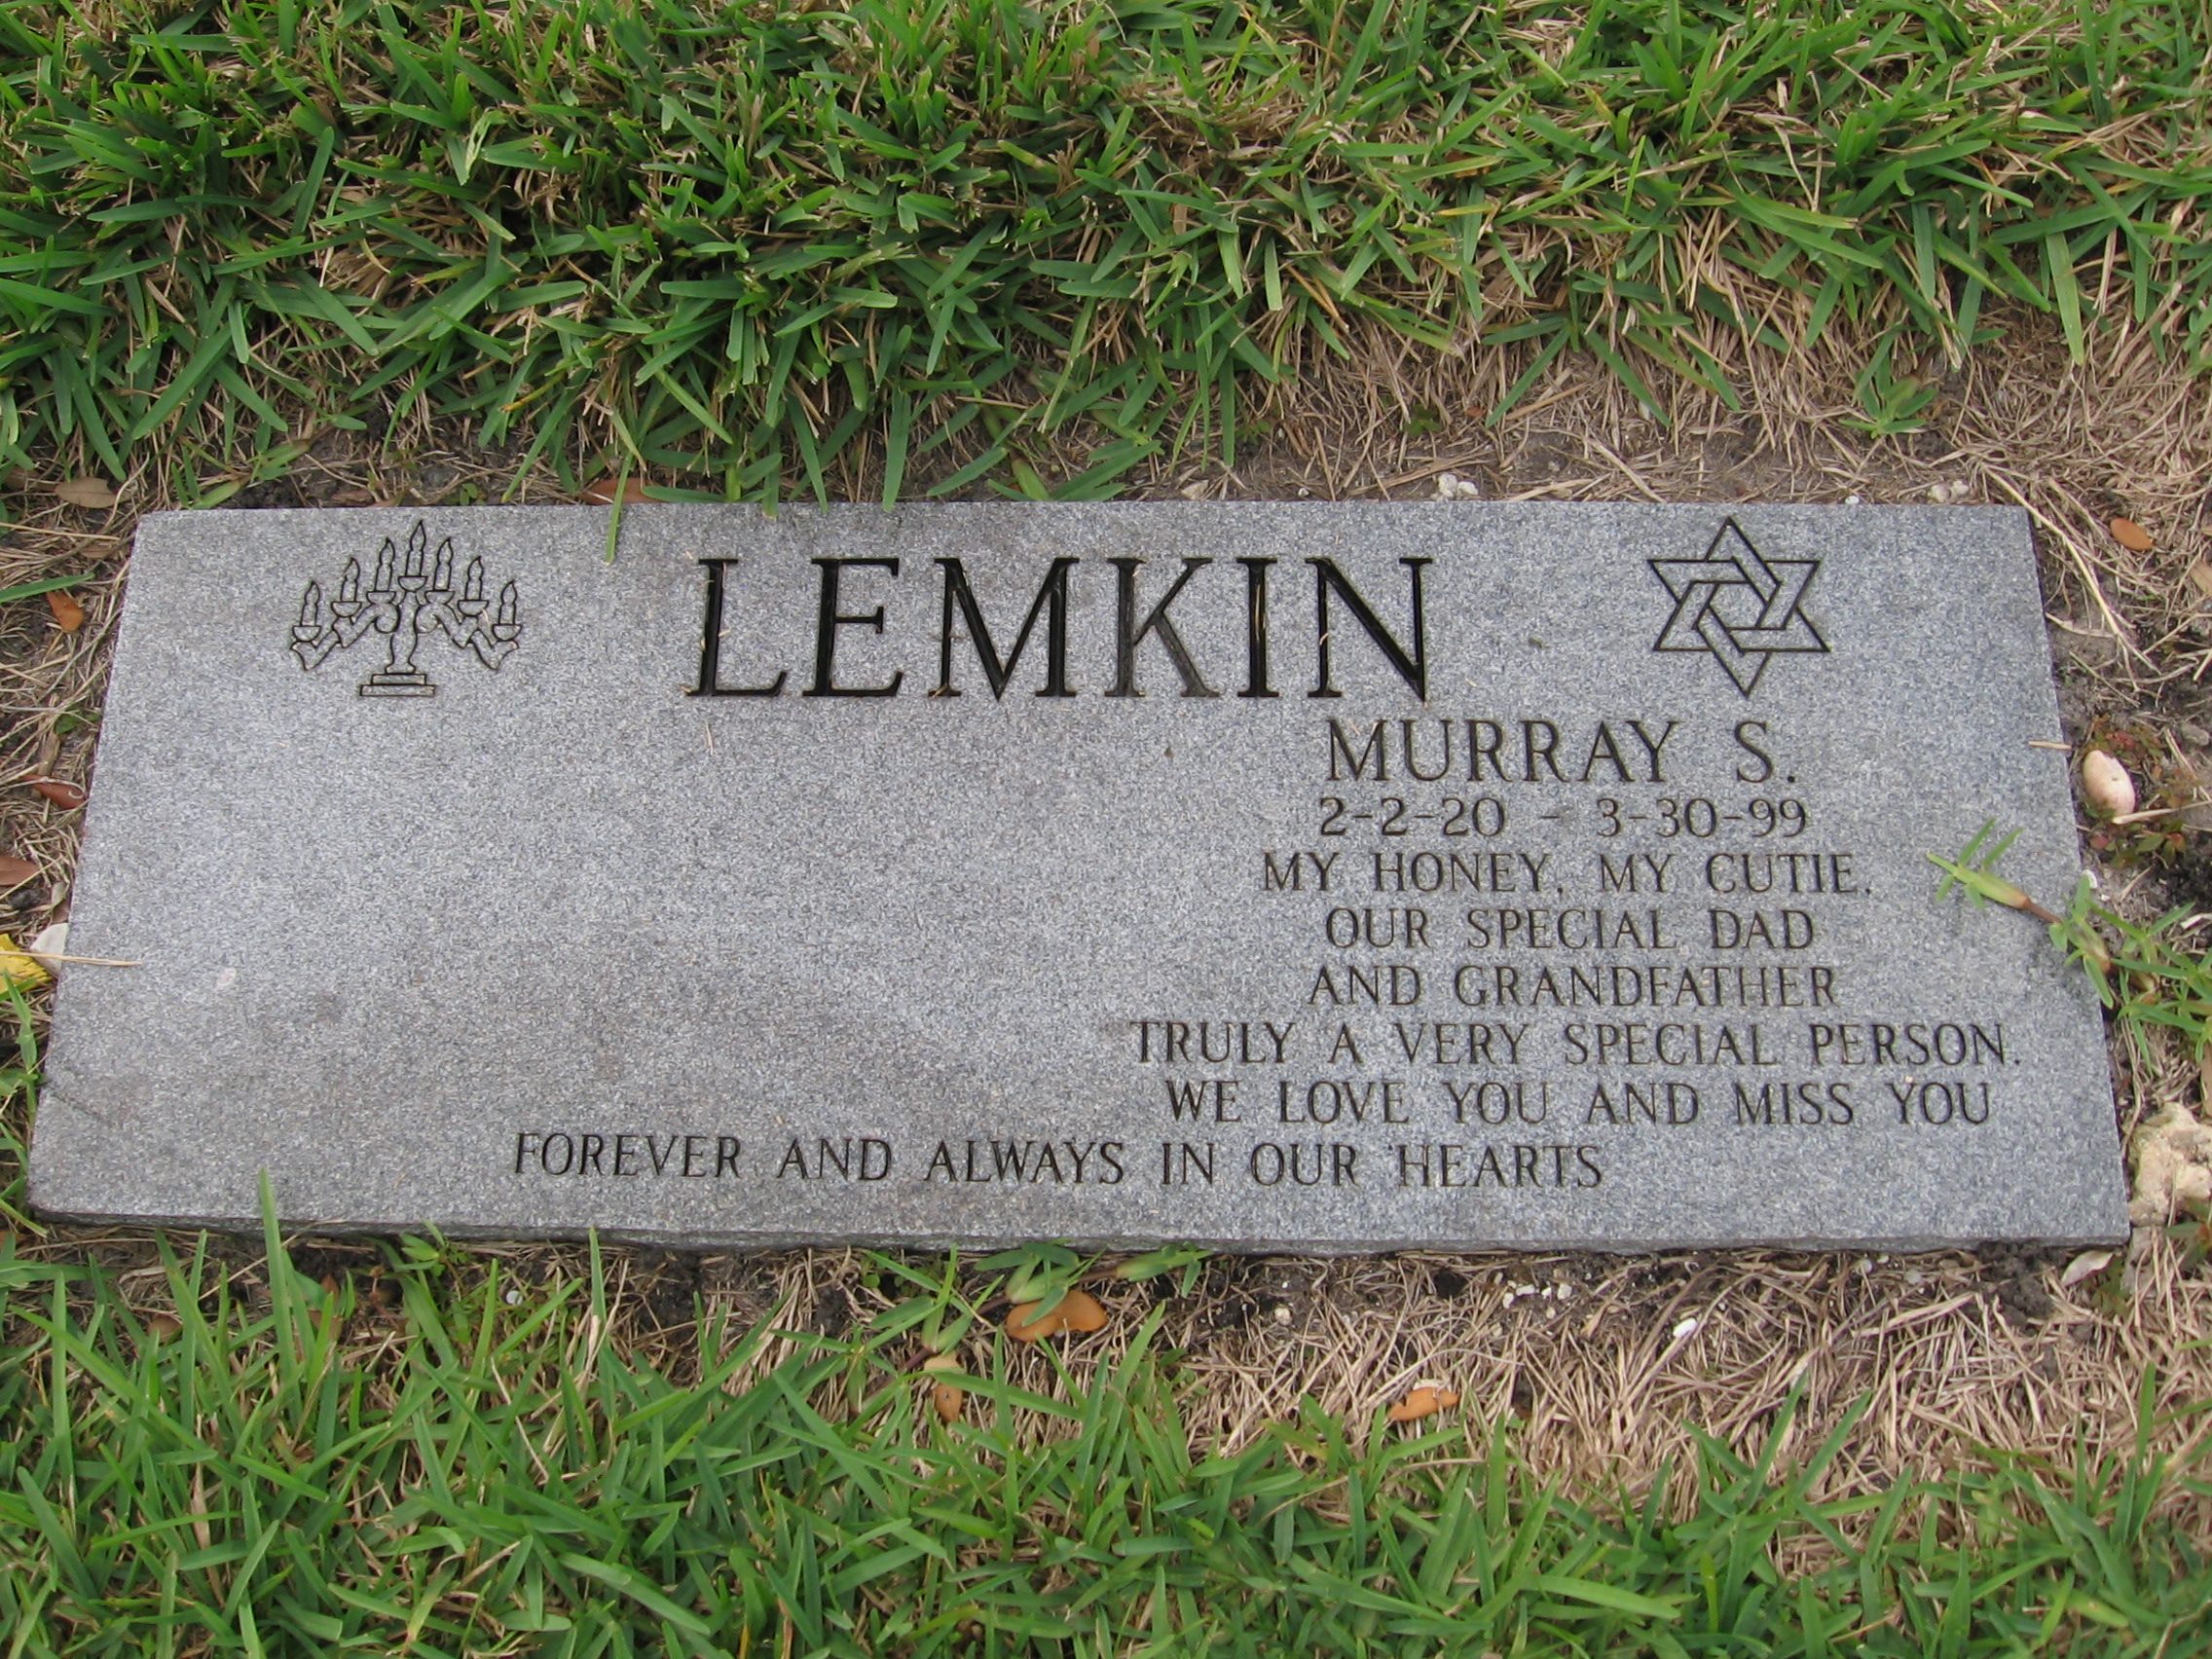 Murray S Lemkin